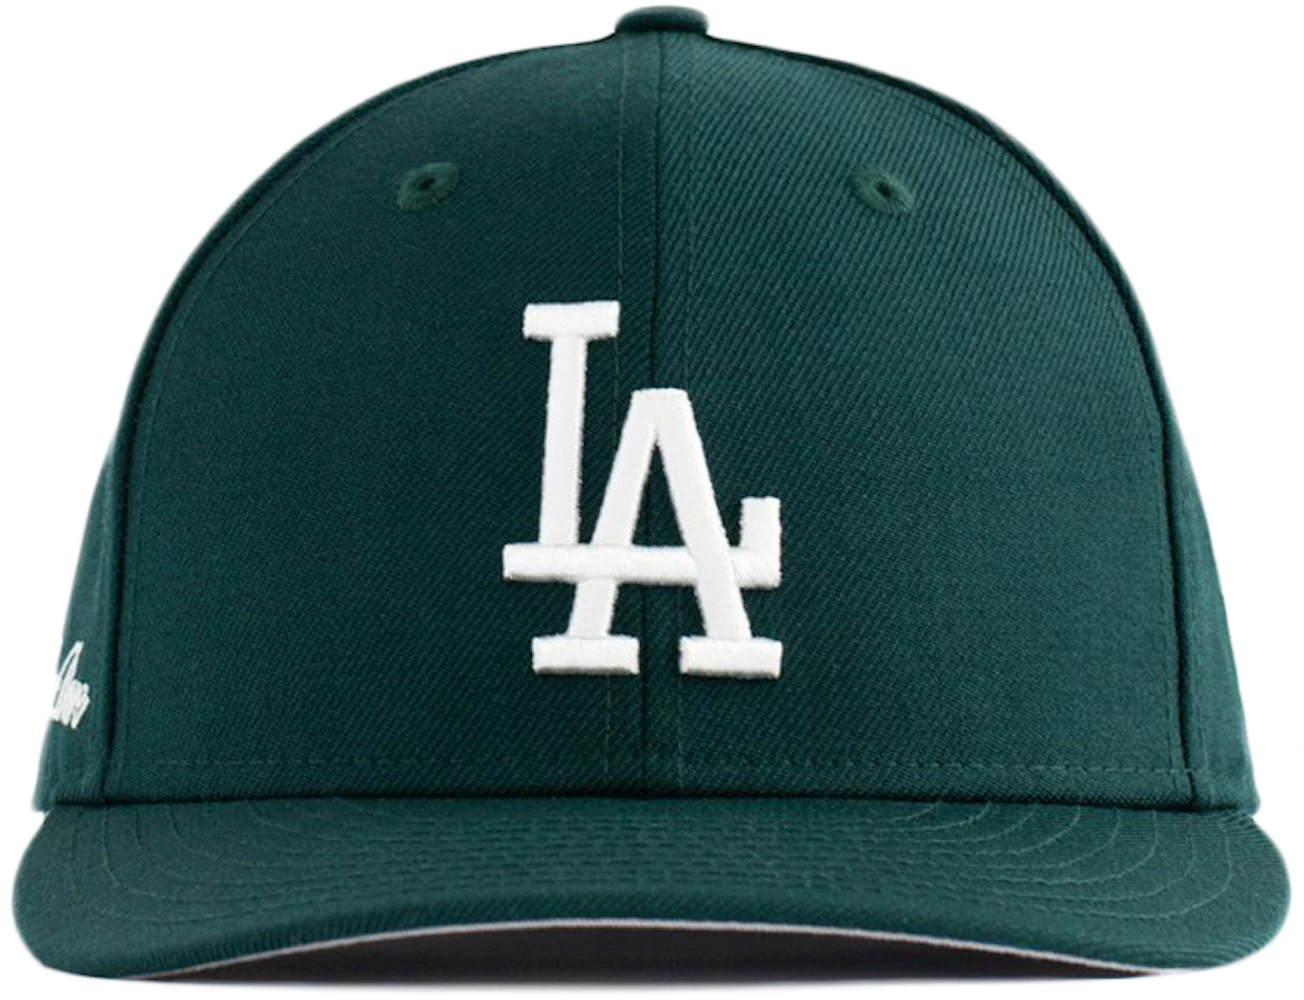 Aime Leon Dore x New Era Dodgers Hat Dark Green - FW20 - US